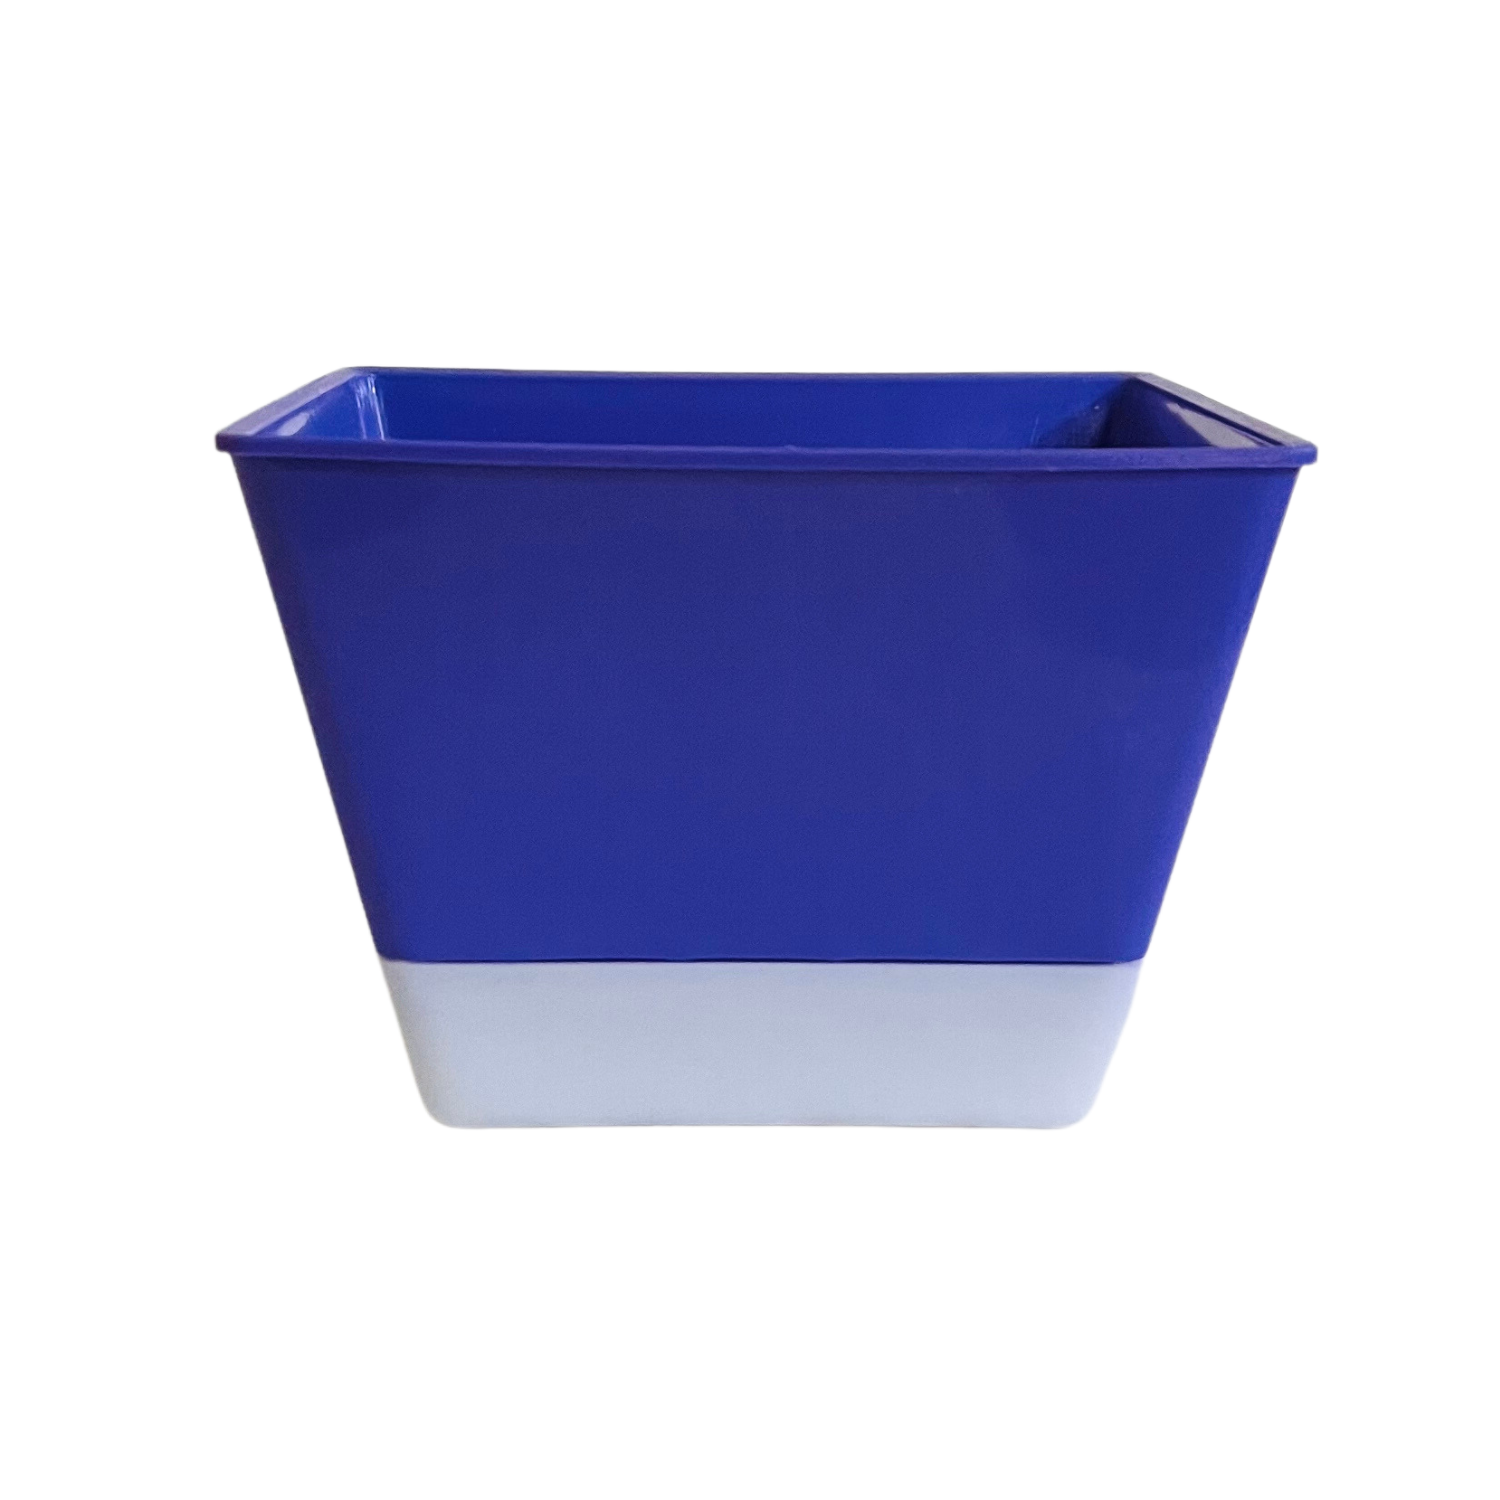 SP4 10cm Square selfwatering Pot For Tabletop | Office | Indoor Garden | Home& Garden (4INCH | 10CM)